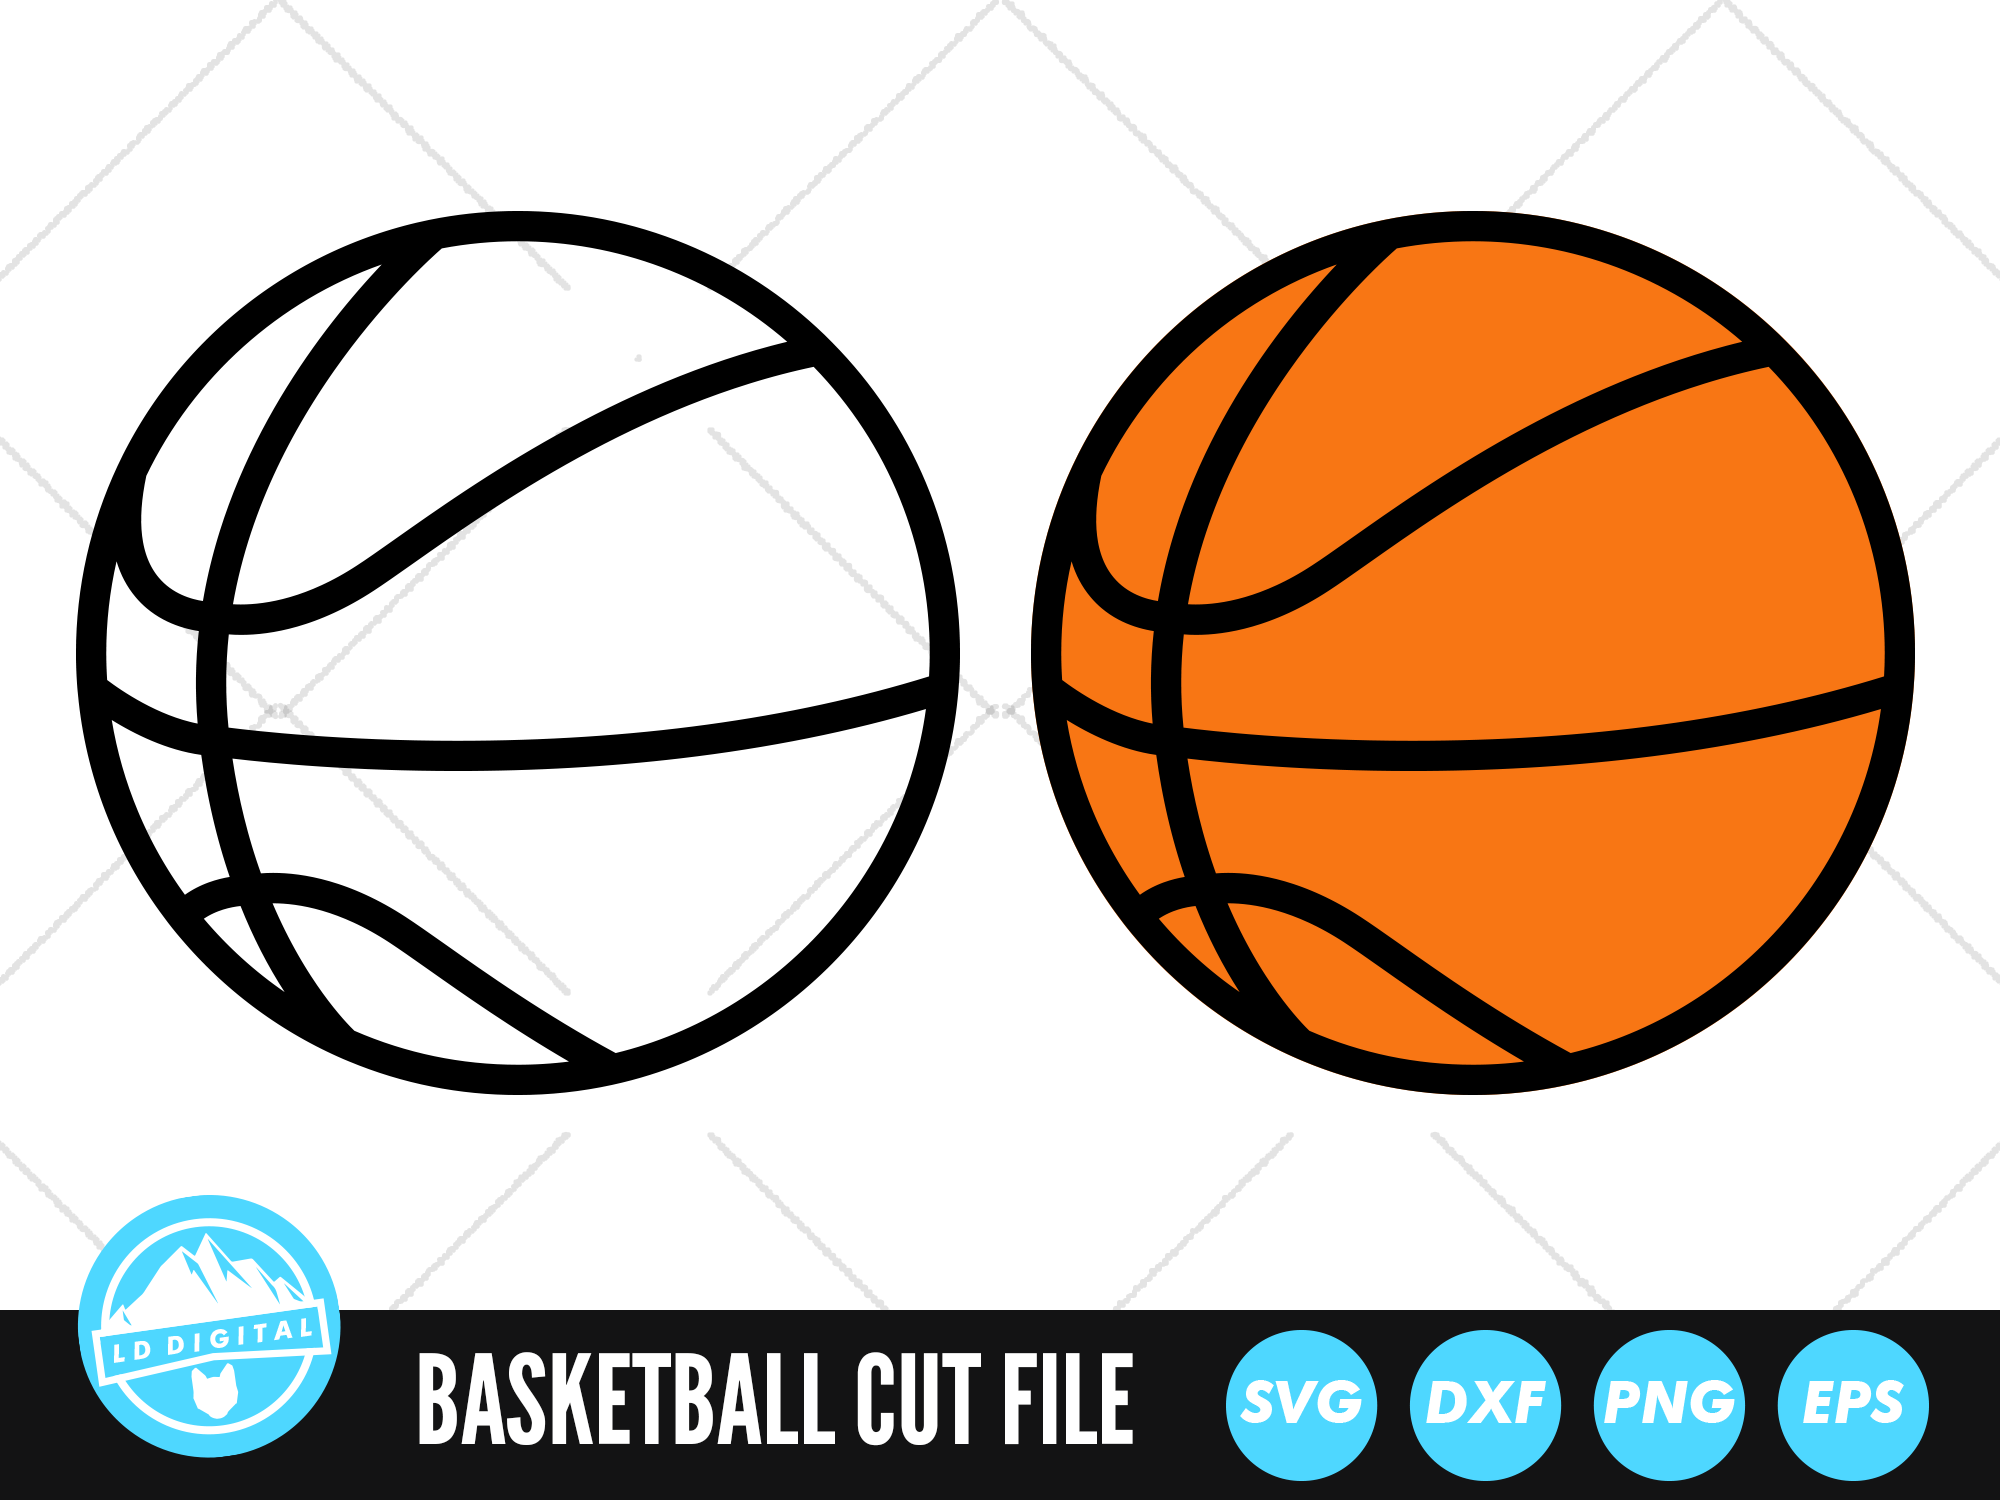 Download Basketball Svg Files Basketball Cut Files Basketball Vector Files By Ld Digital Thehungryjpeg Com